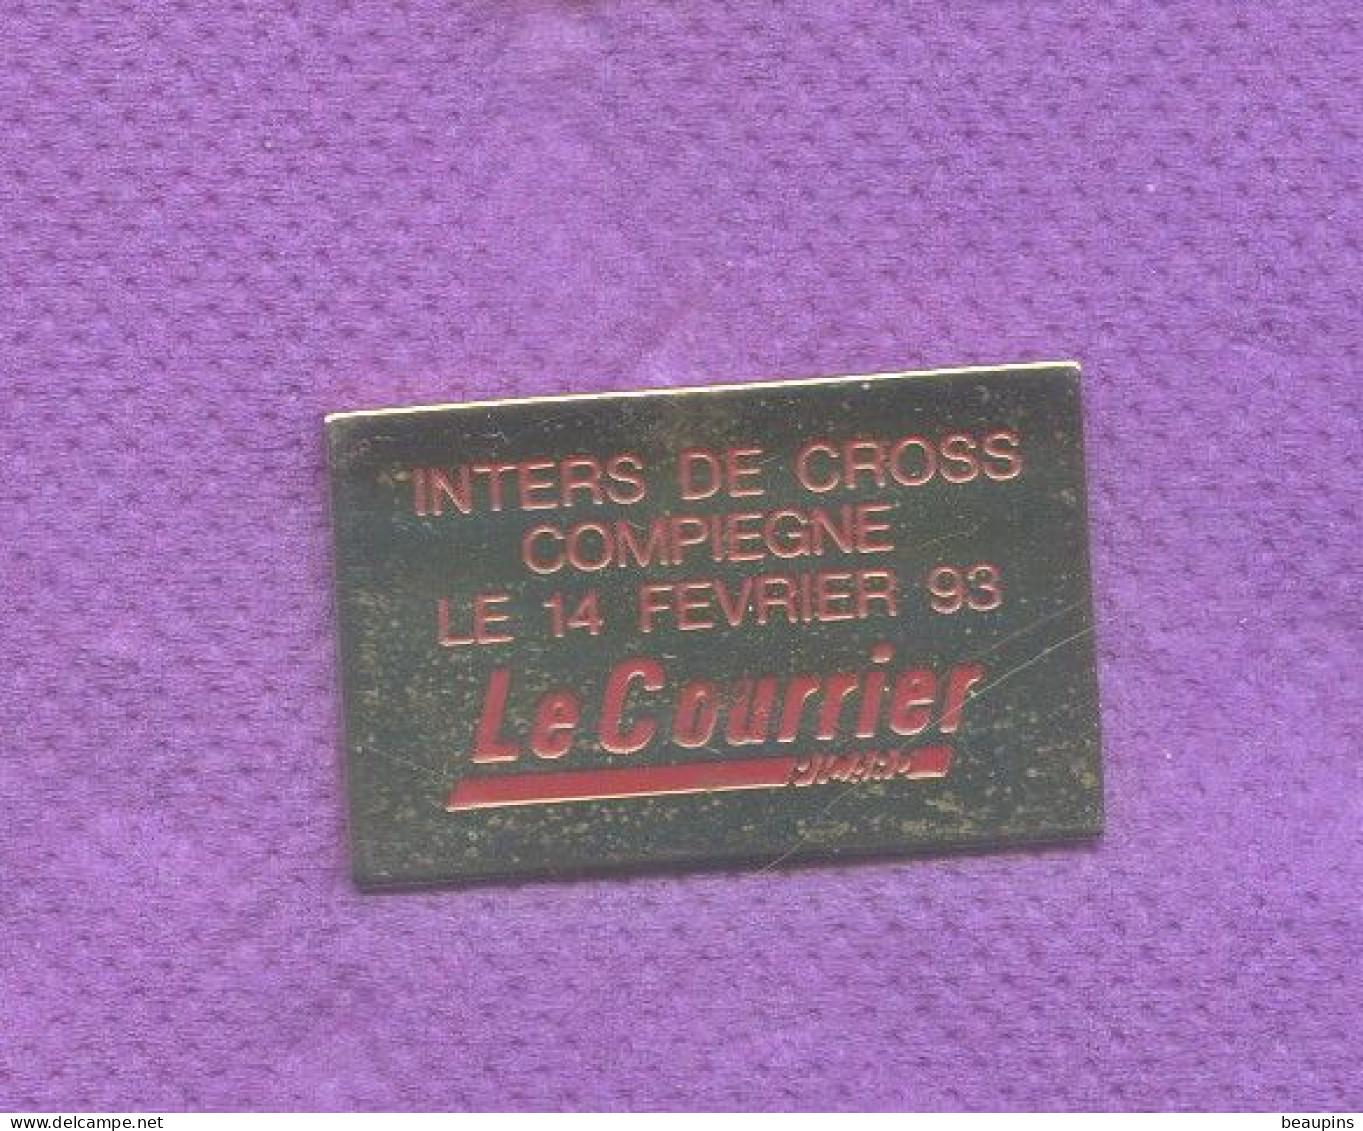 Rare Pins Media Presse Journal Le Courrier Picard Inters Cross Compiegne 1993 N610 - Medias